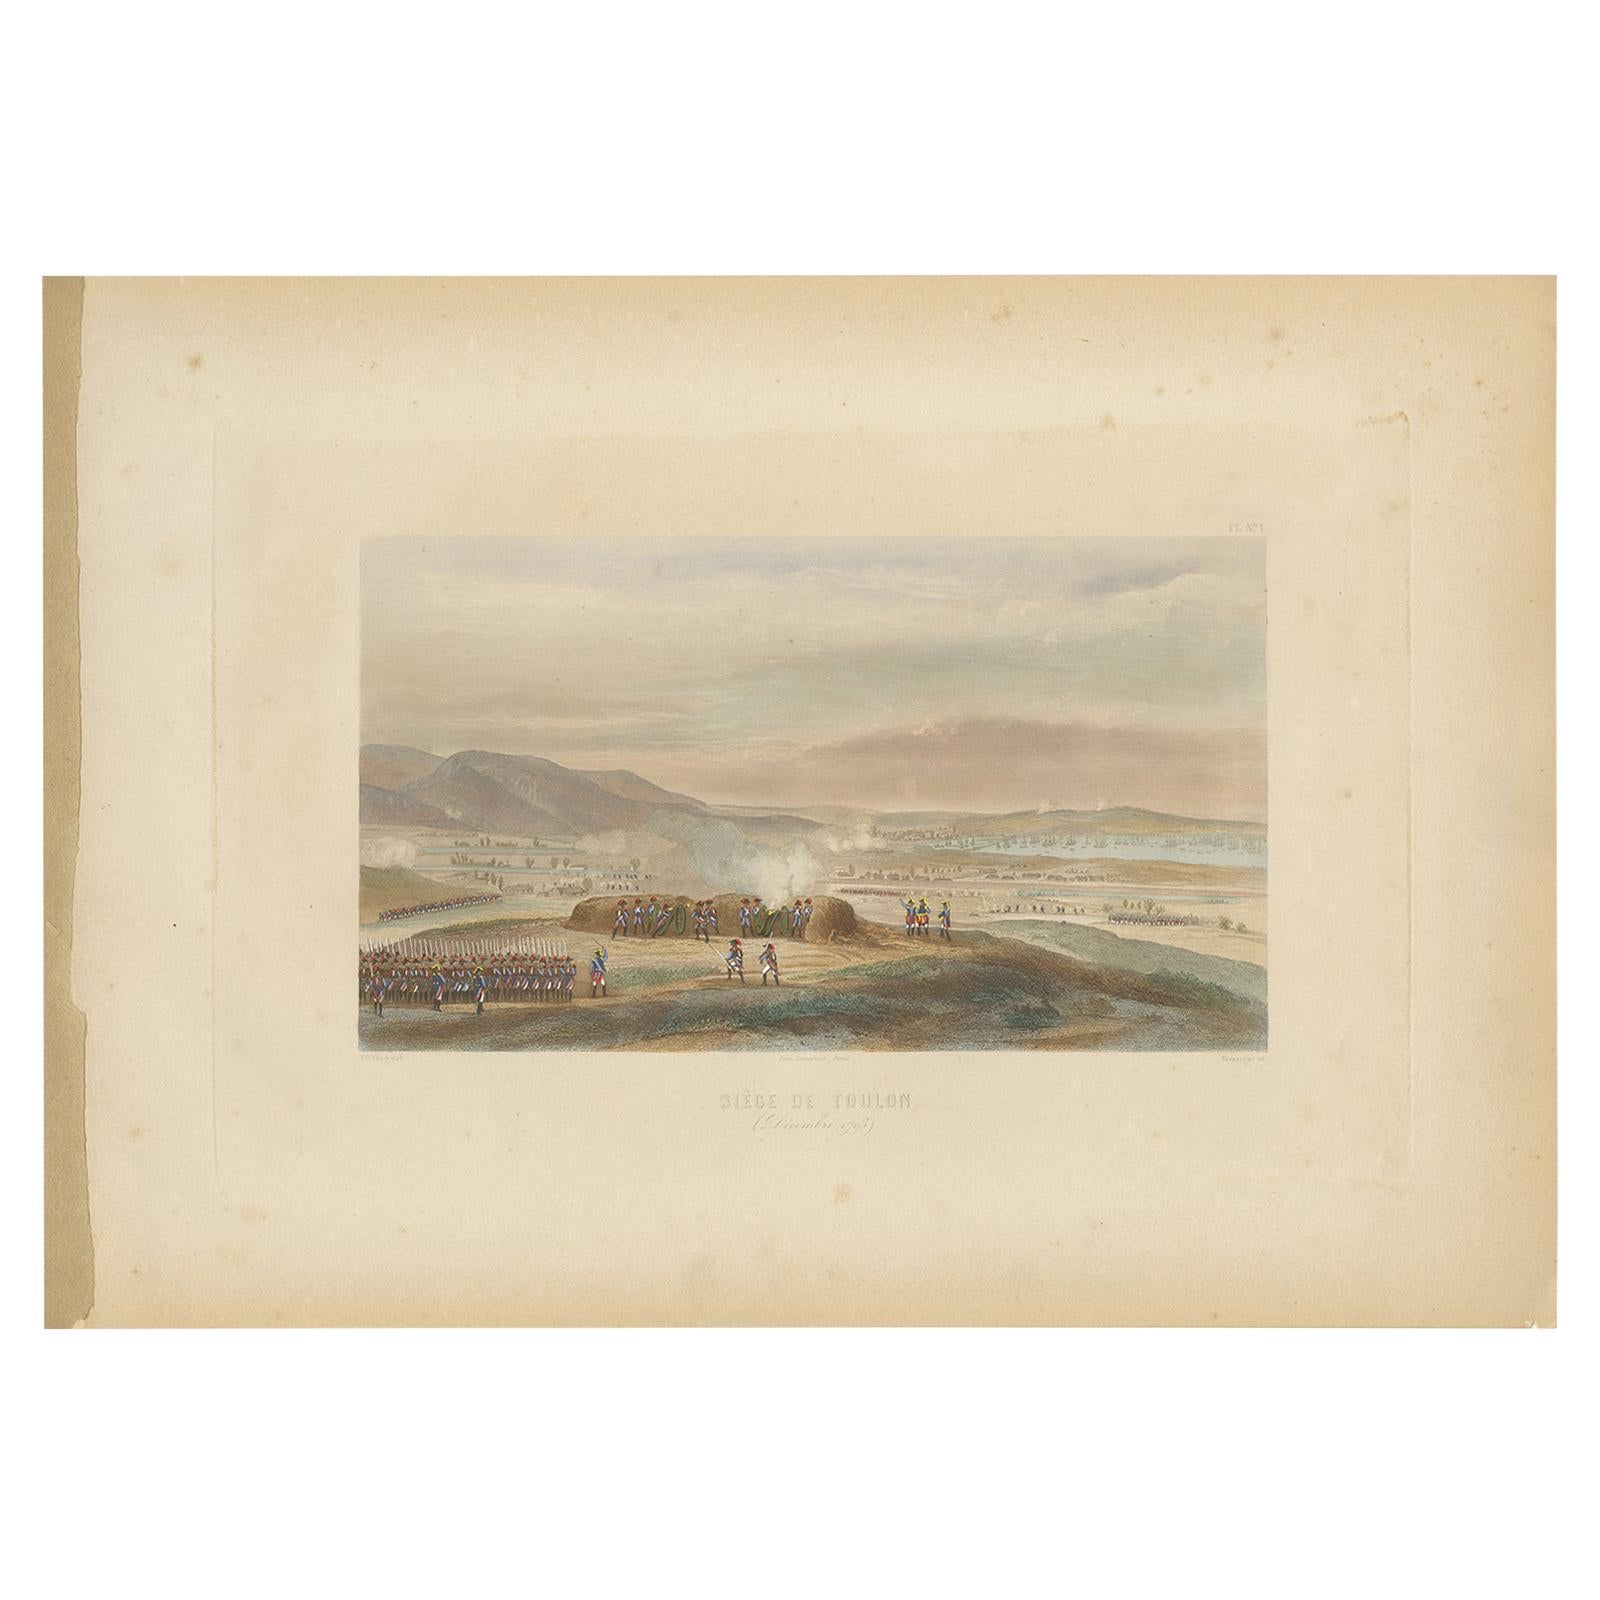 Impression ancienne de la Siege de Toulon (circa 1860) en vente